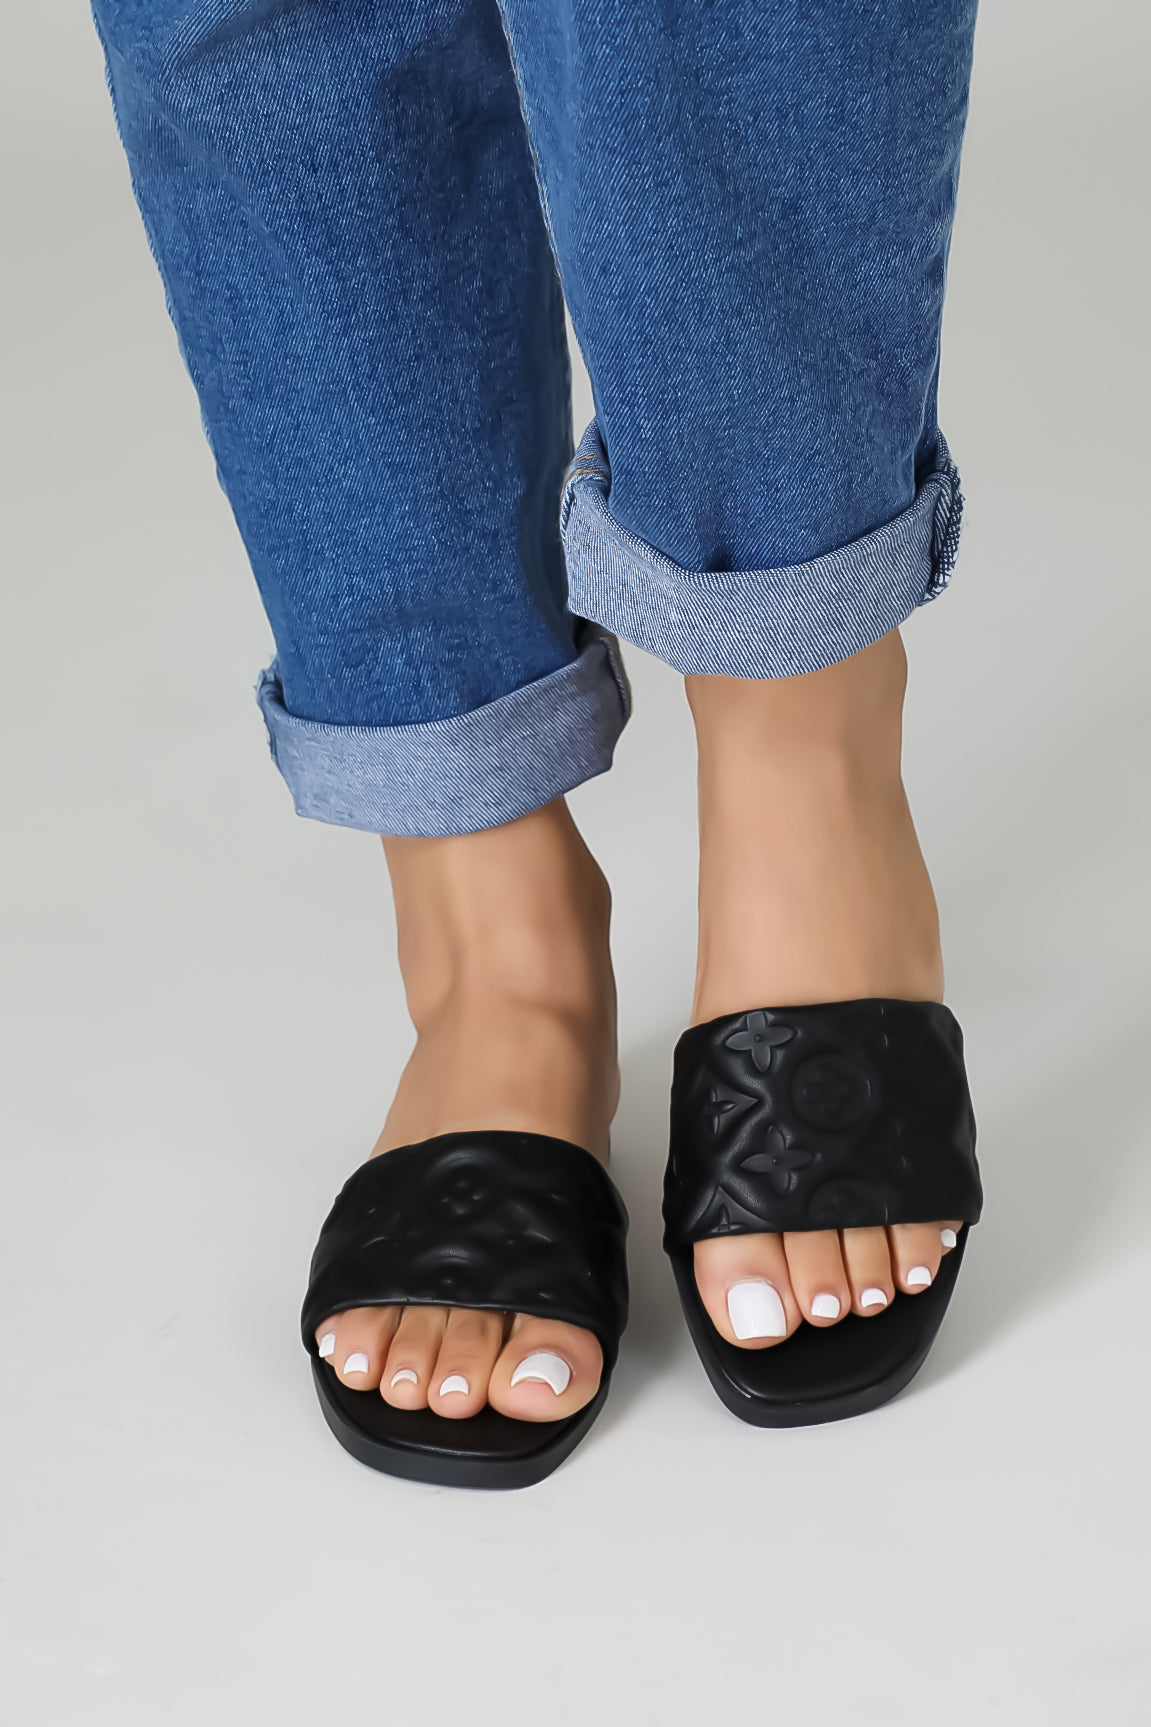 Designer Babe Sandals